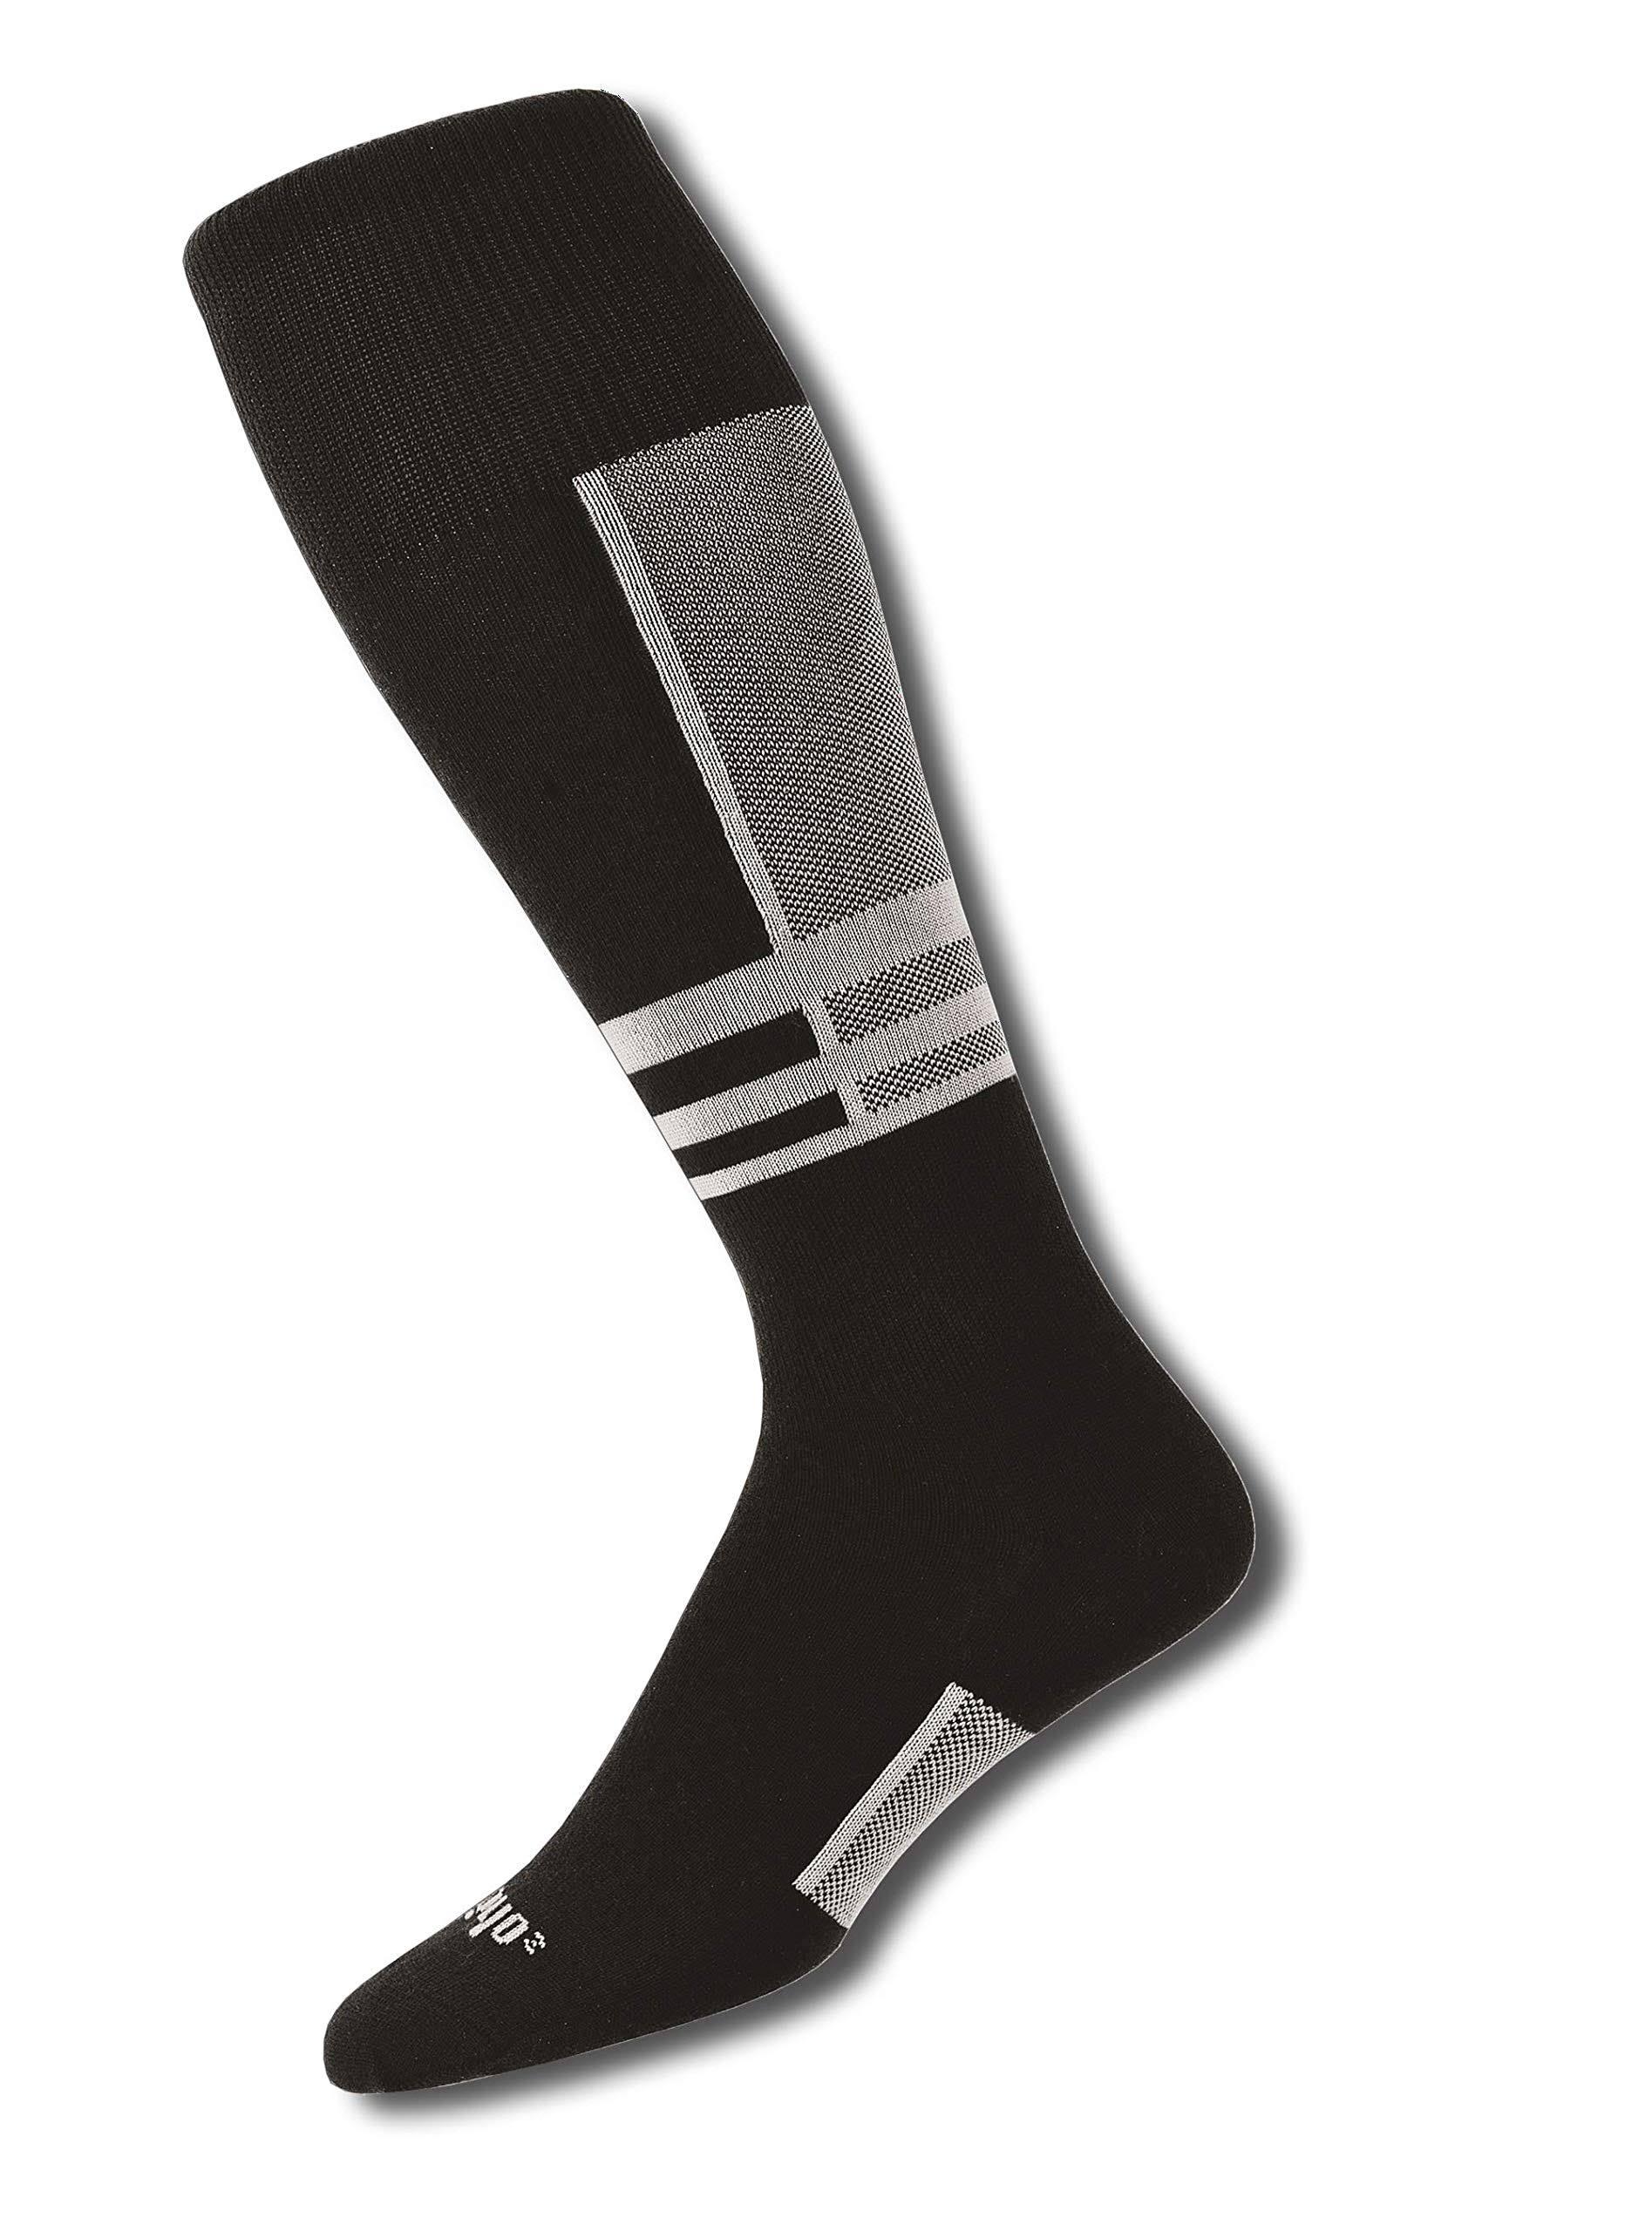 Thorlos Ultra Thin Custom Ski Socks - Black and White, Small